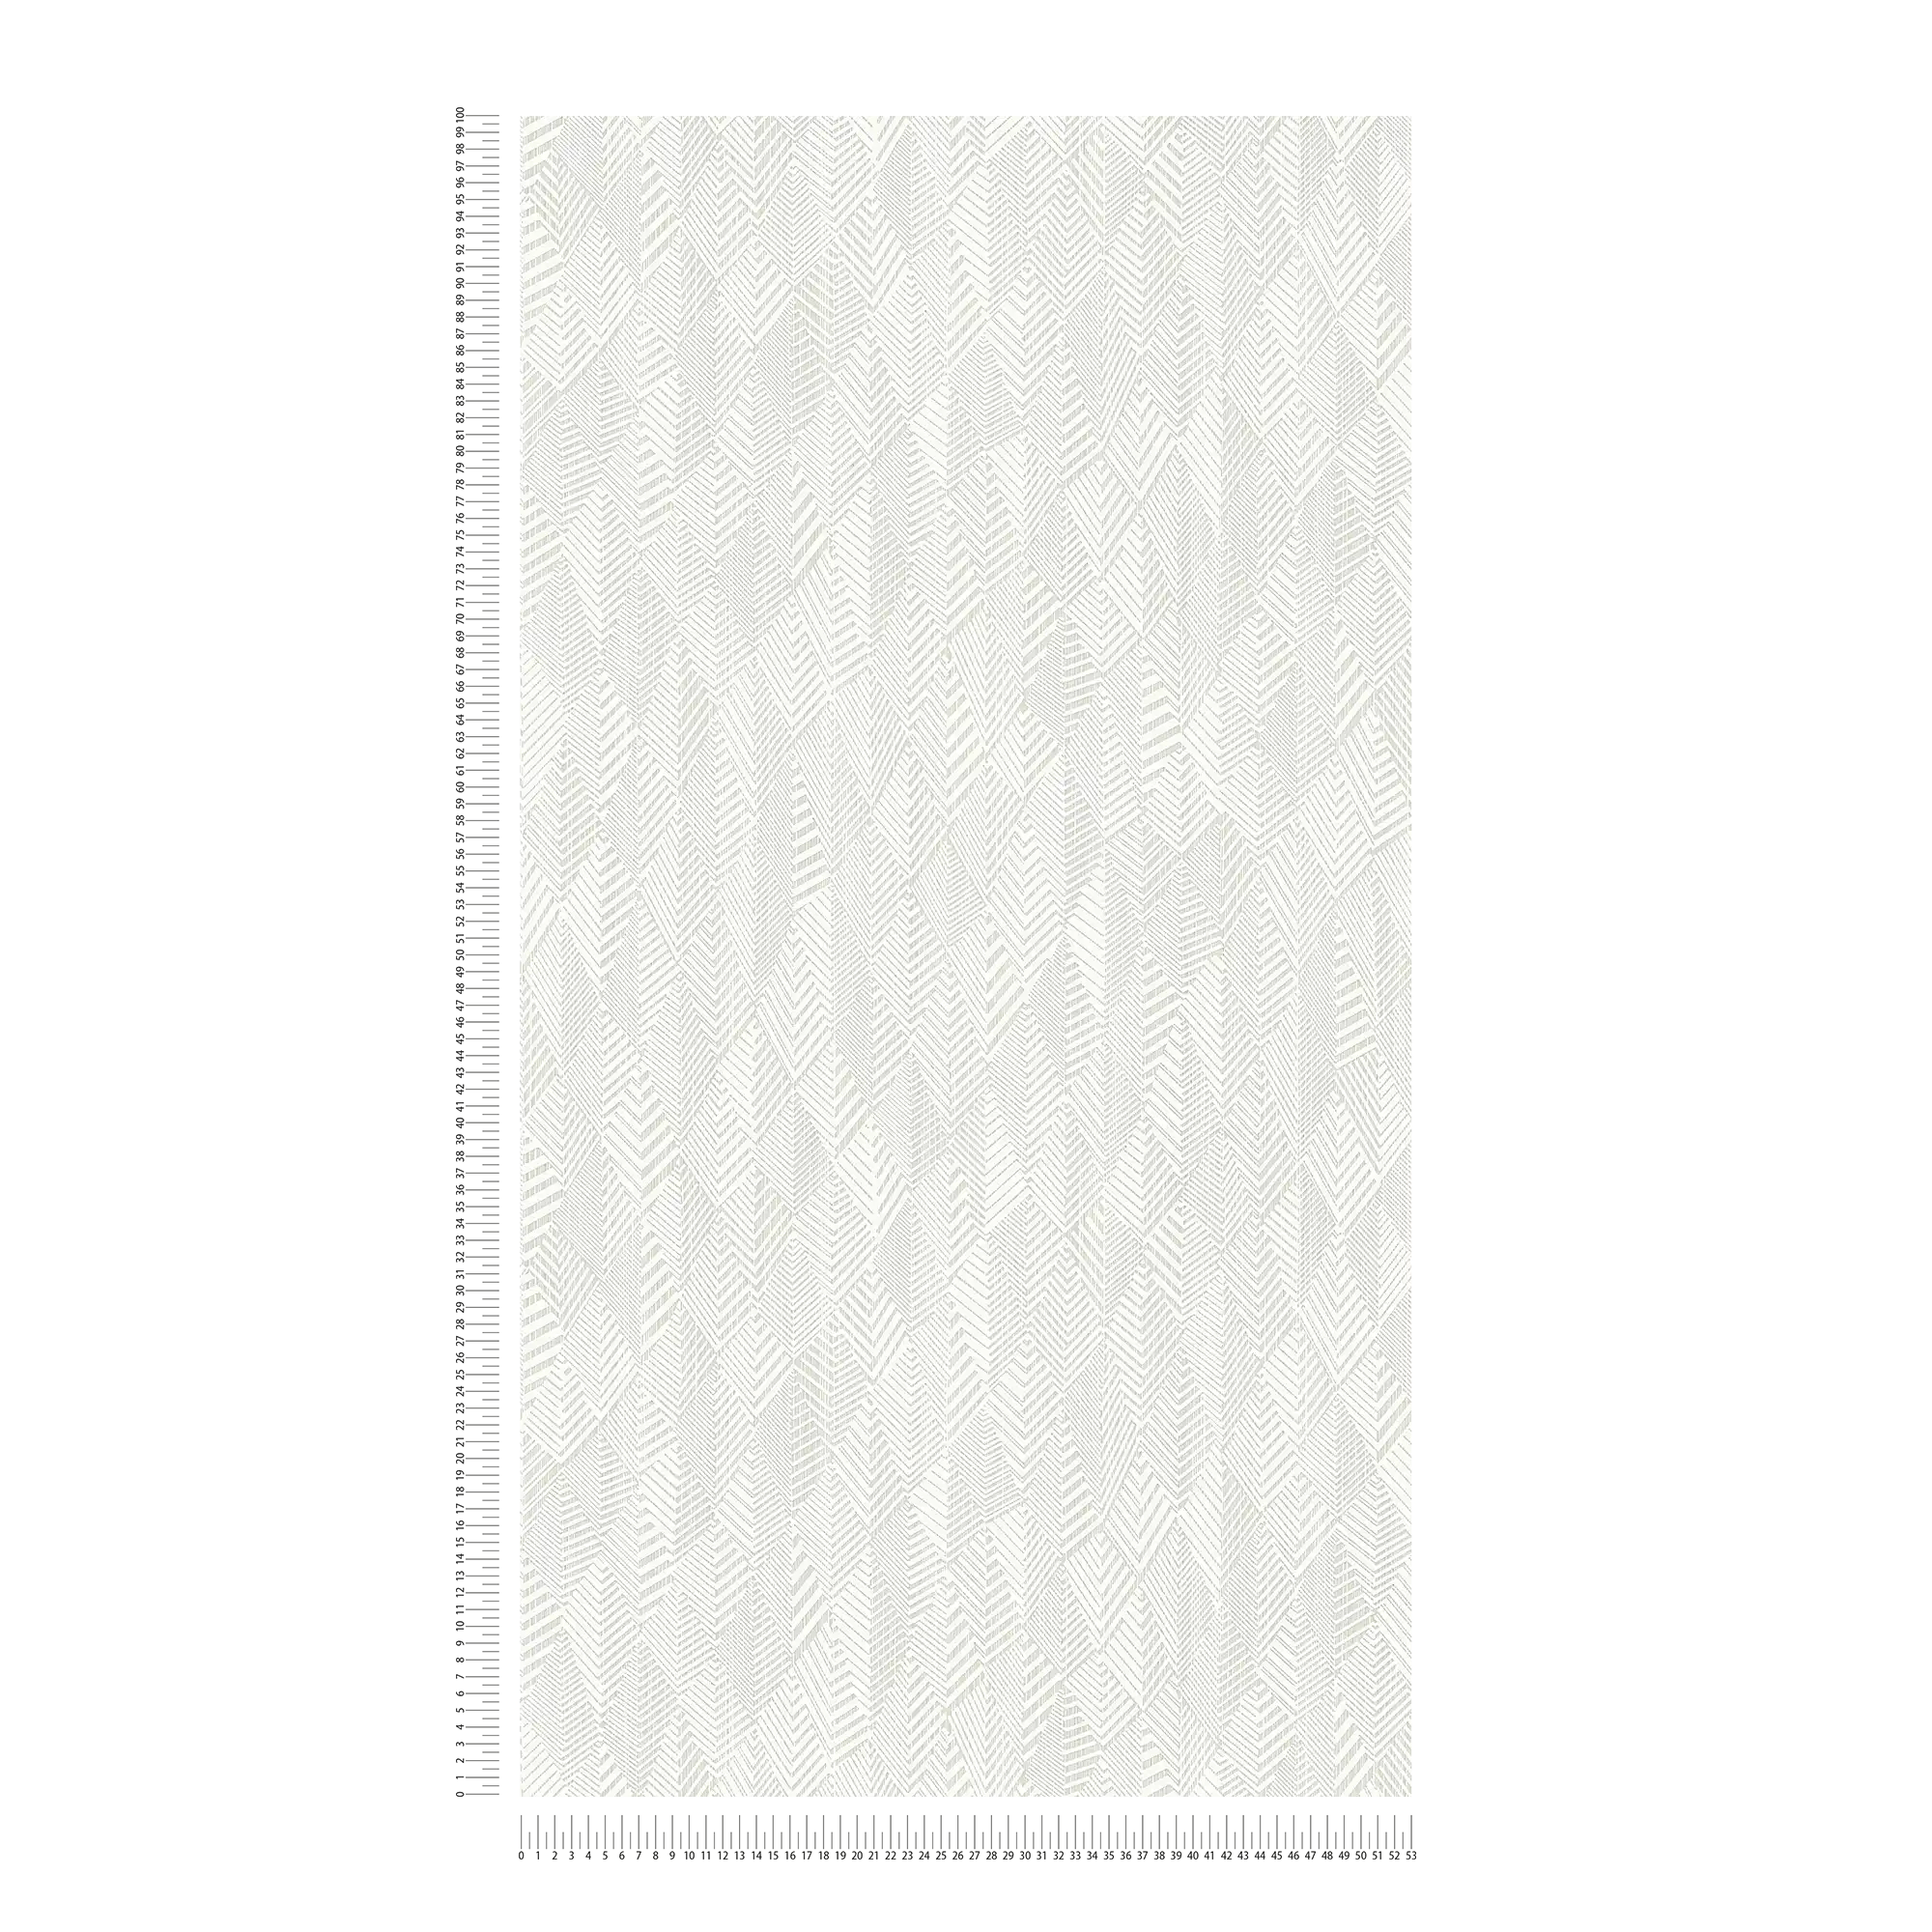             Carta da parati tinta unicat con motivo a linee astratte - crema, bianco
        